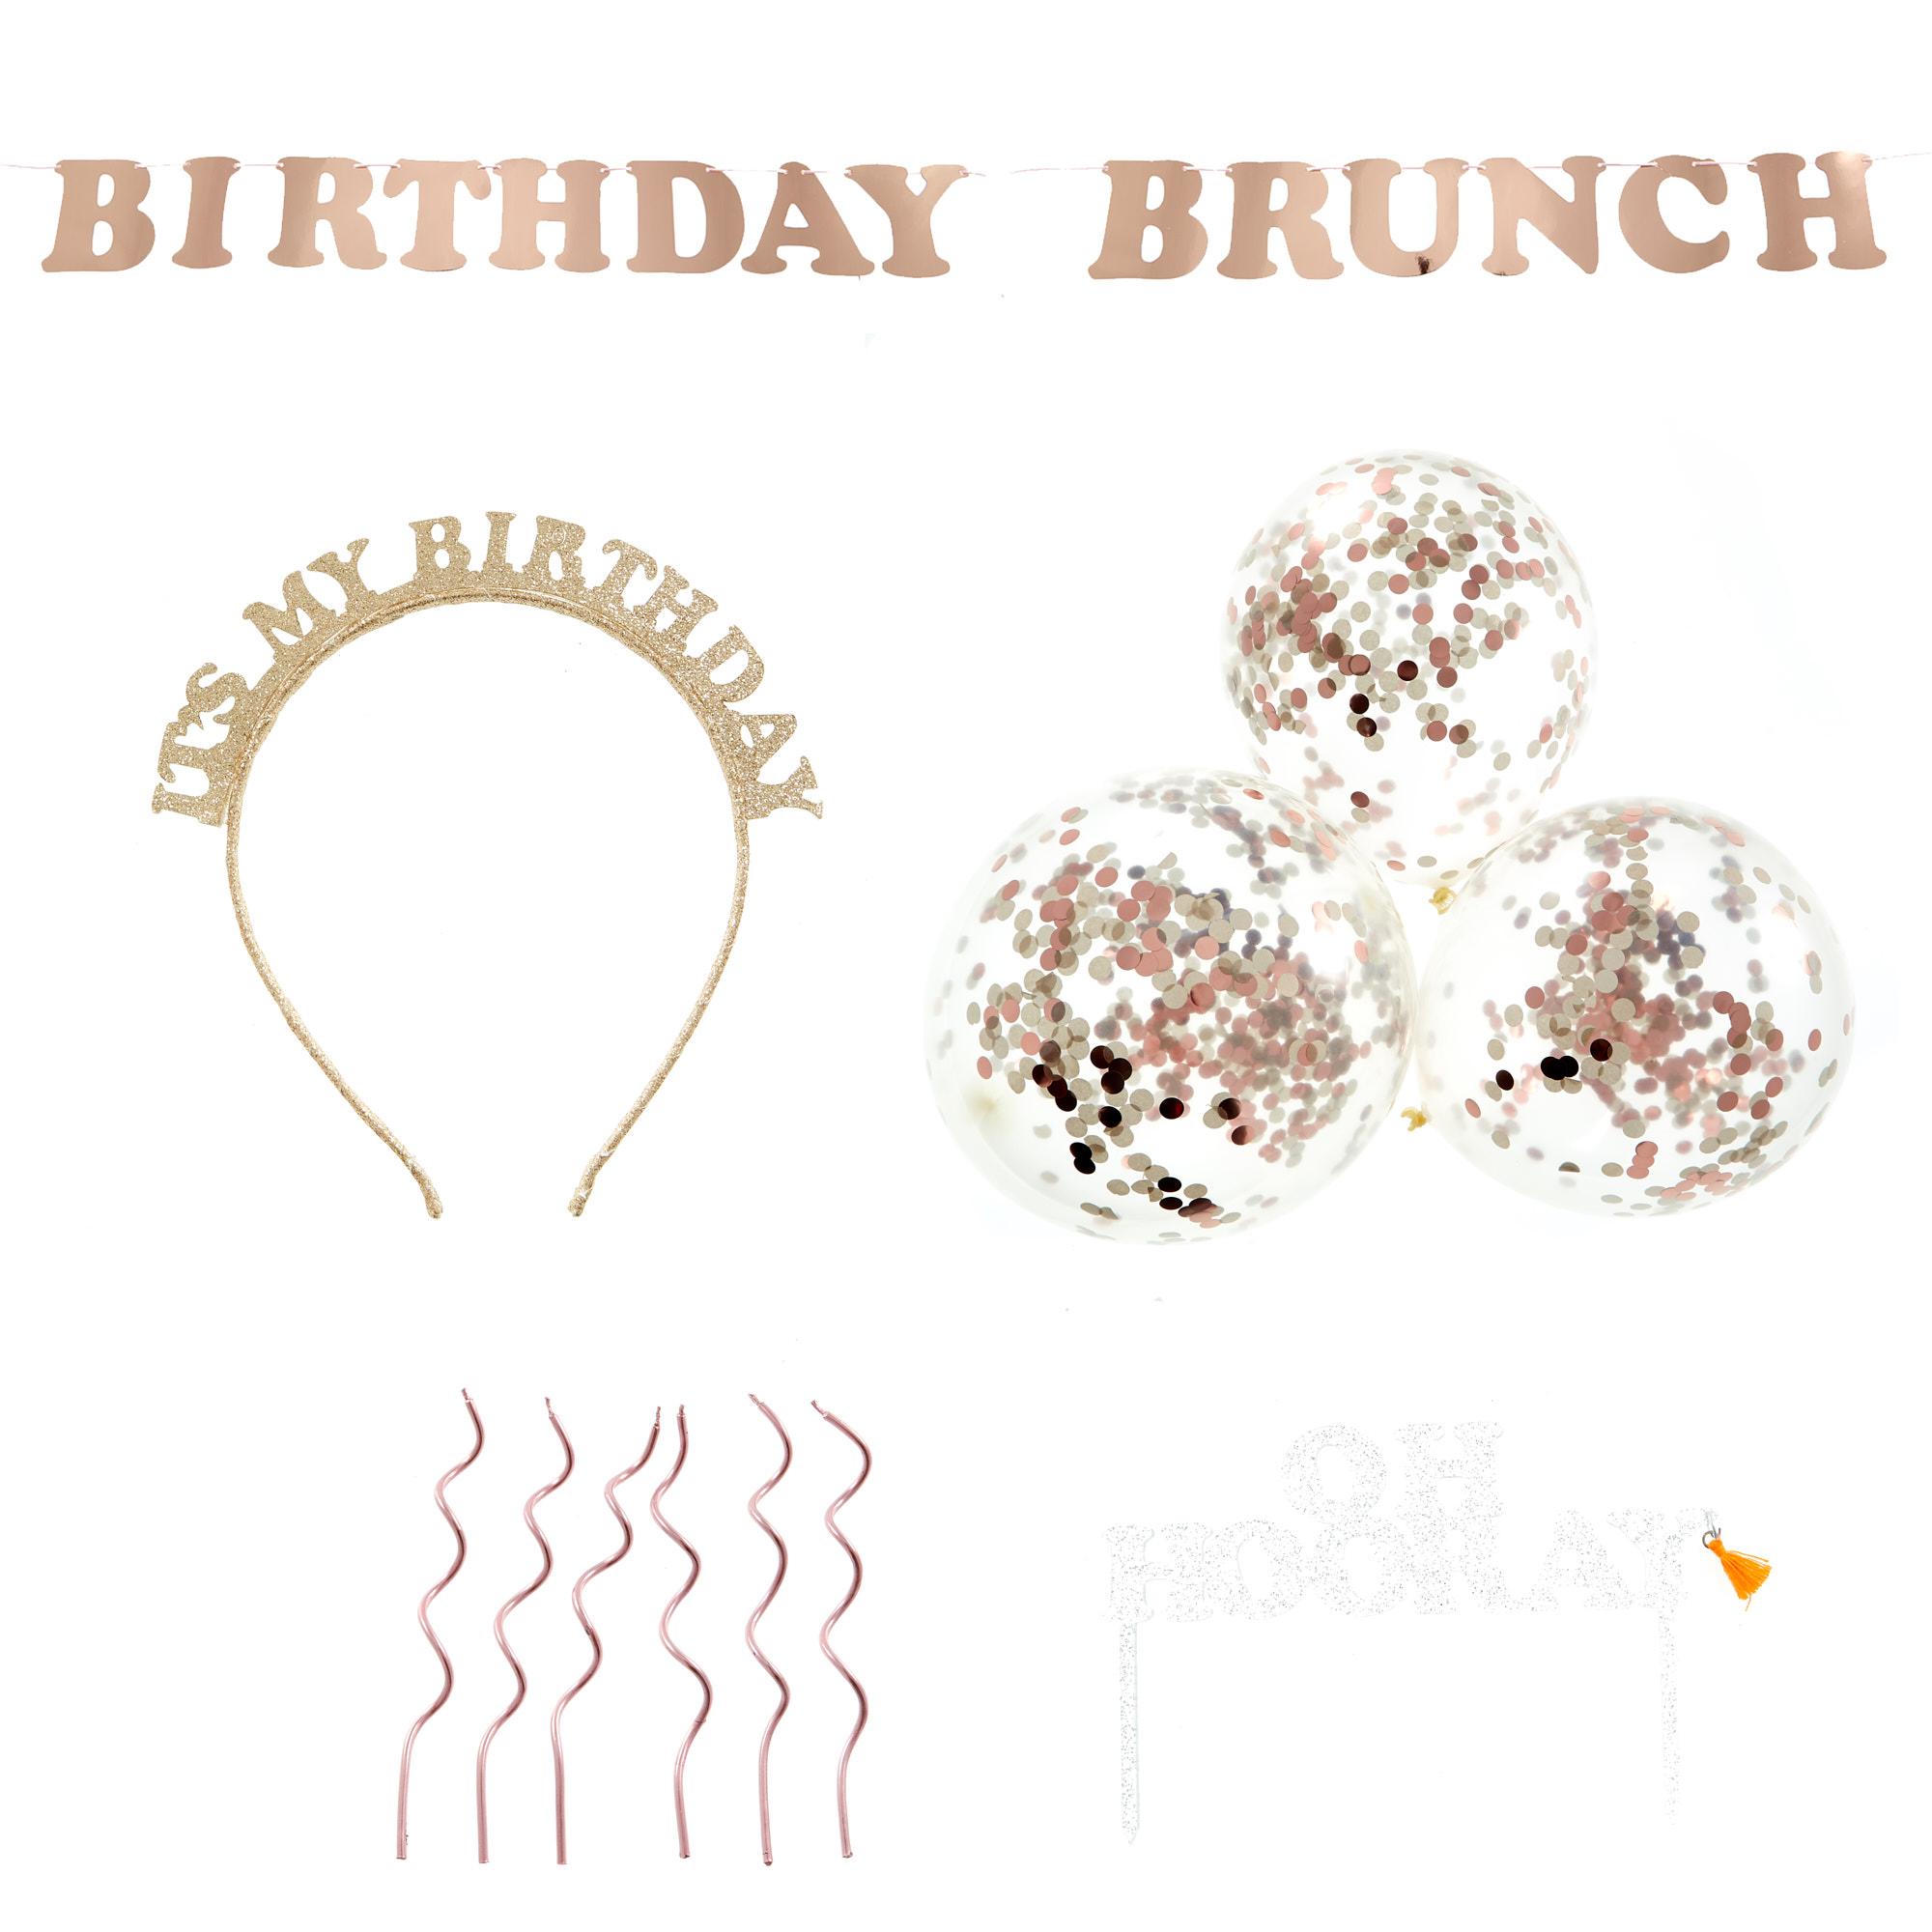 Birthday Brunch Party Accessories Bundle - 20 Pieces 